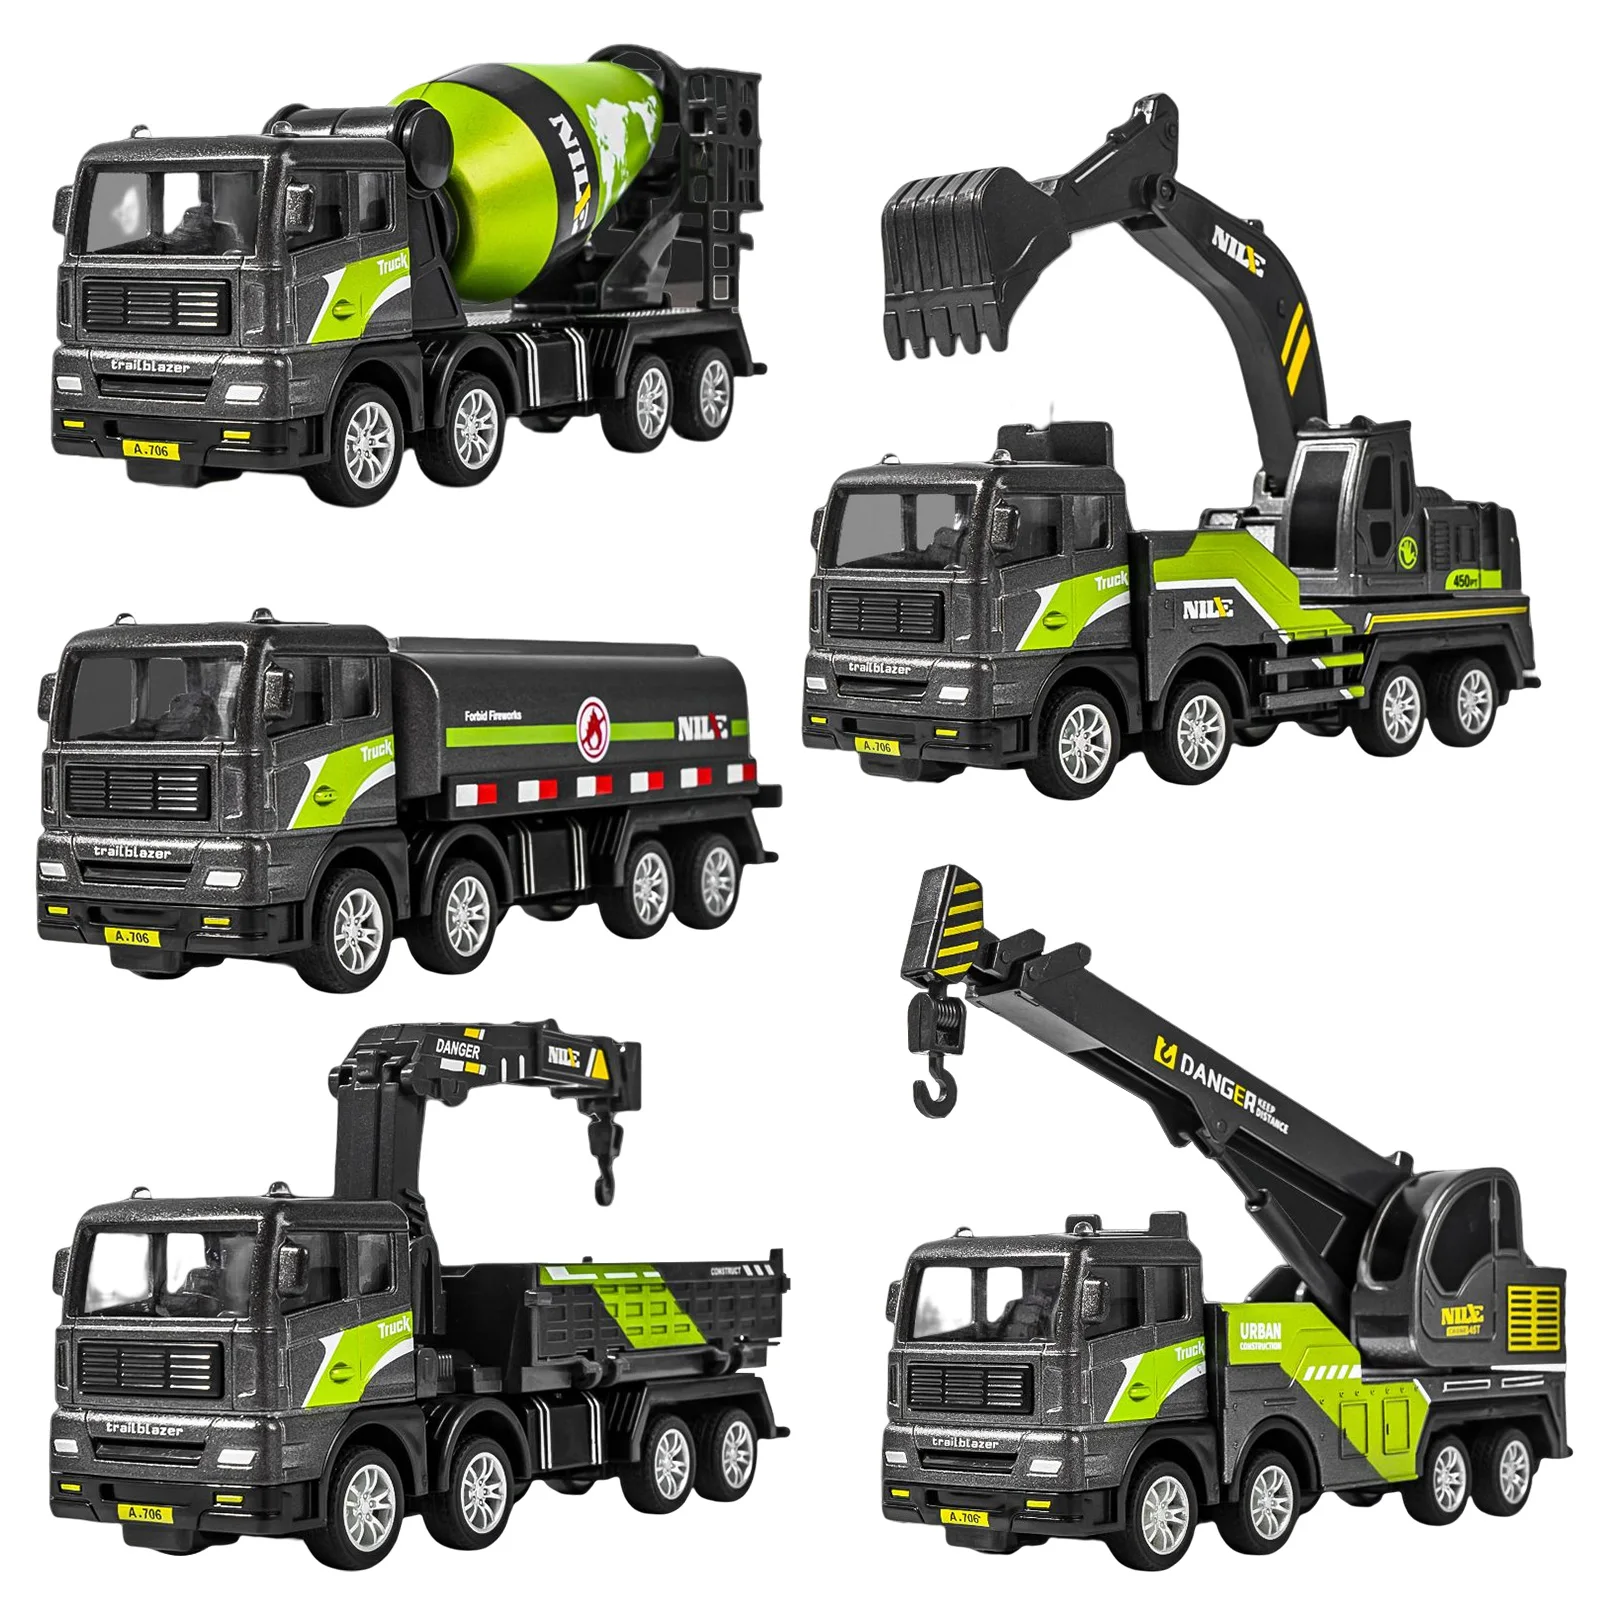 

1pcs Engineering Truck Building Blocks Crane Bulldozer Excavator Car City Construction Dump Truck Toy For Children Boys Girls